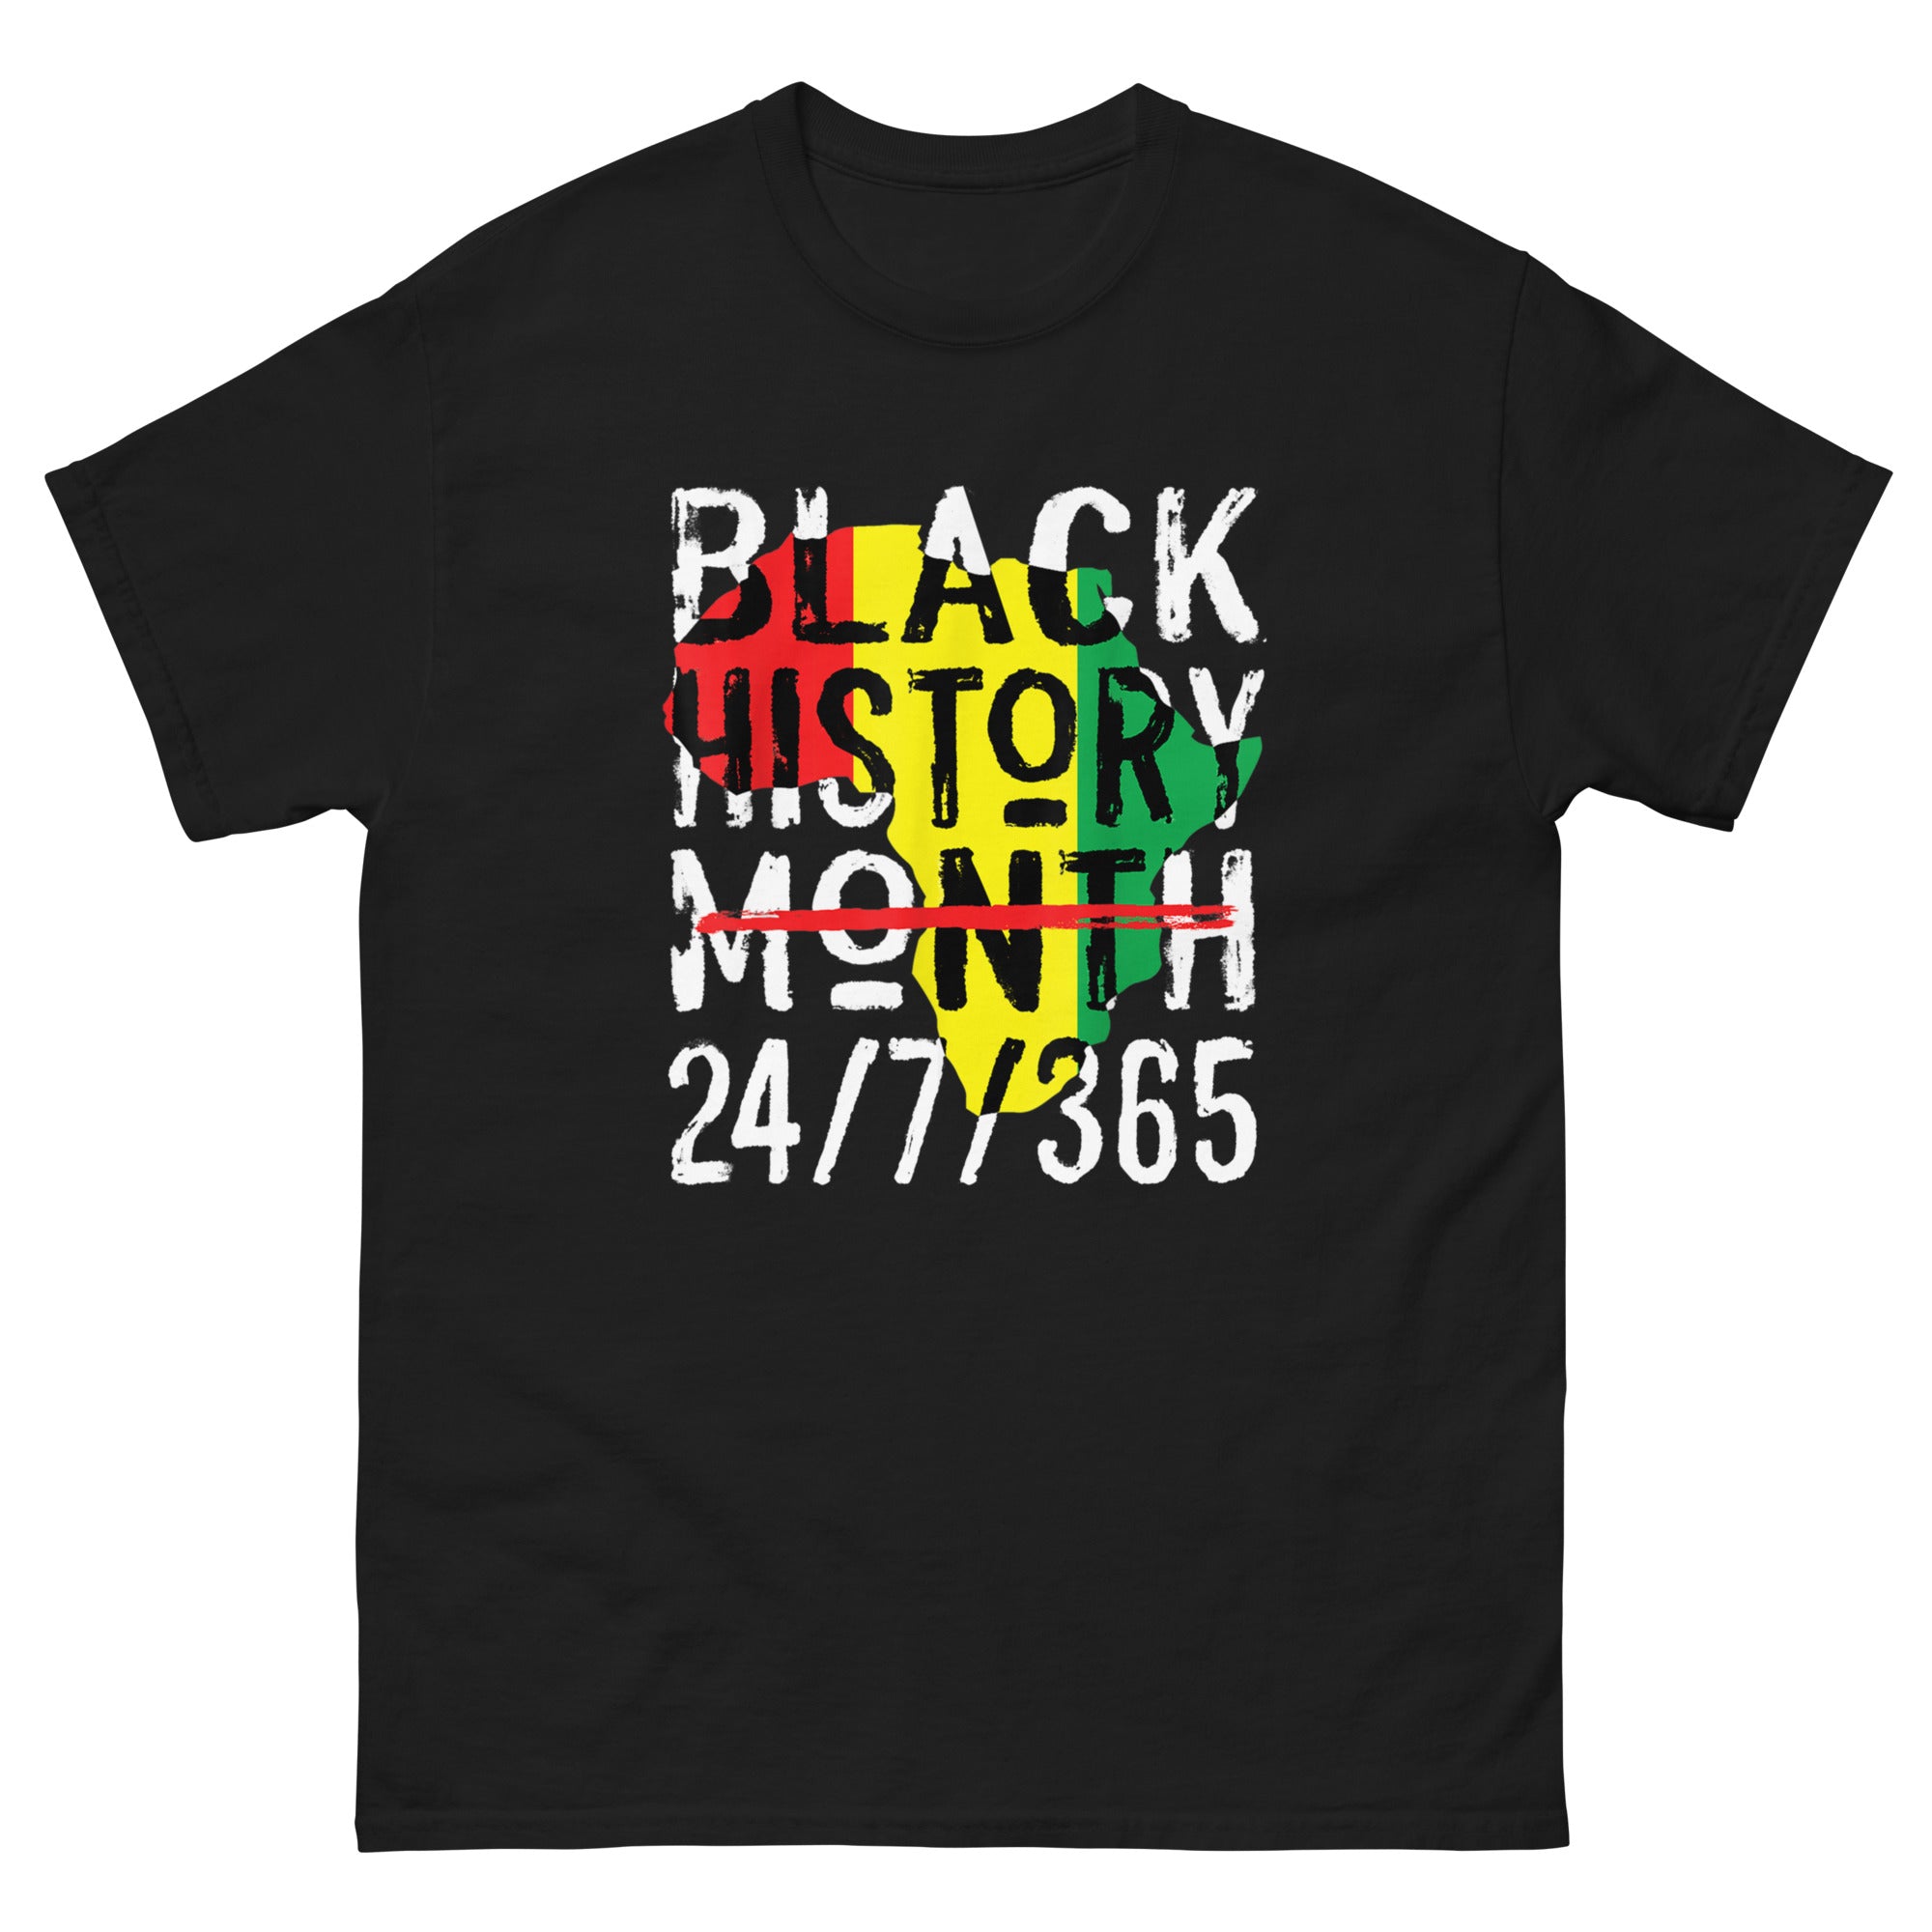 "BLACK HISTORY 24/7/365" Men's classic tee